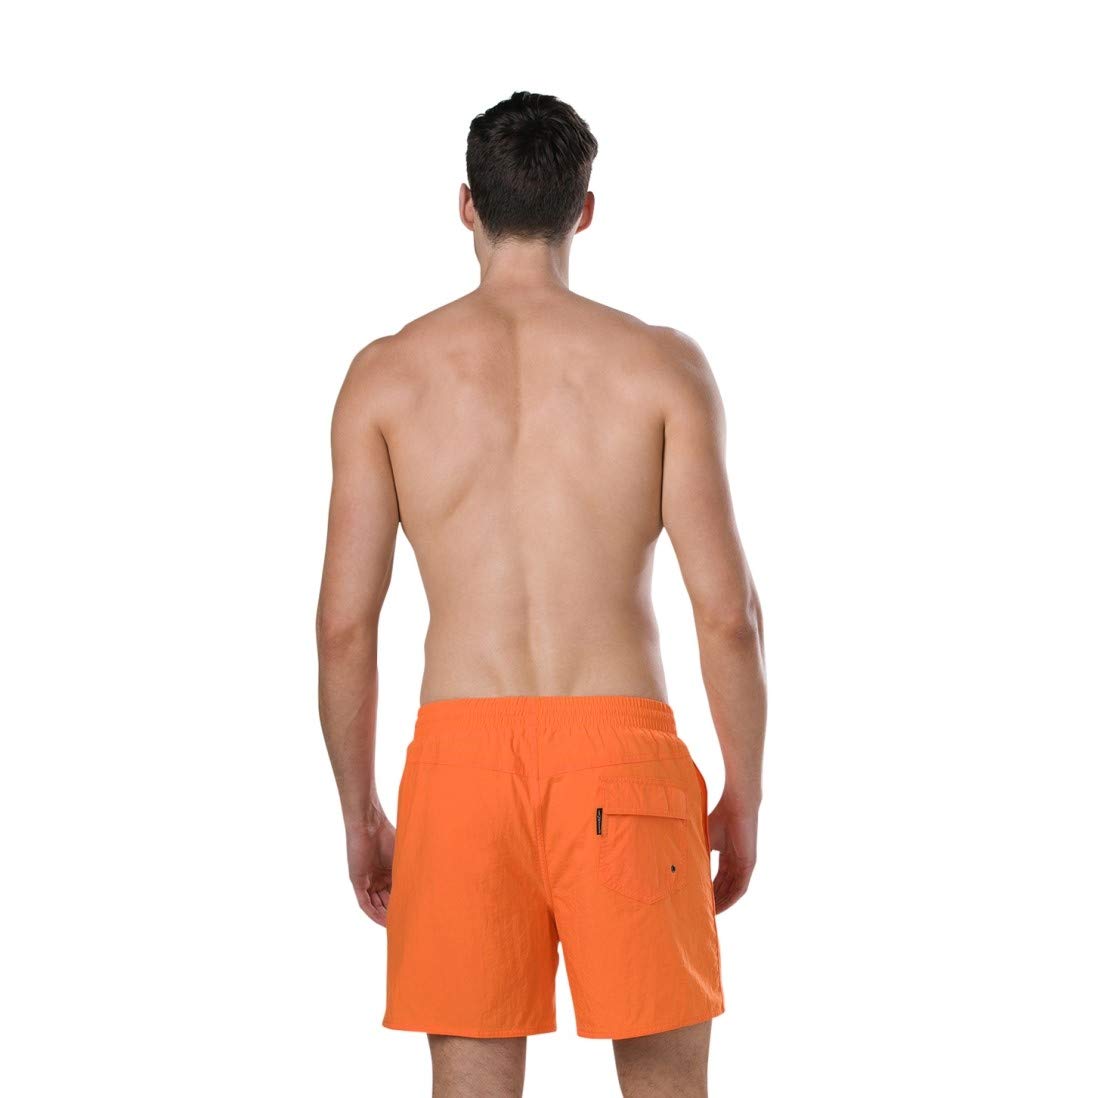 Speedo India Shorts for Men - Best Price online Prokicksports.com